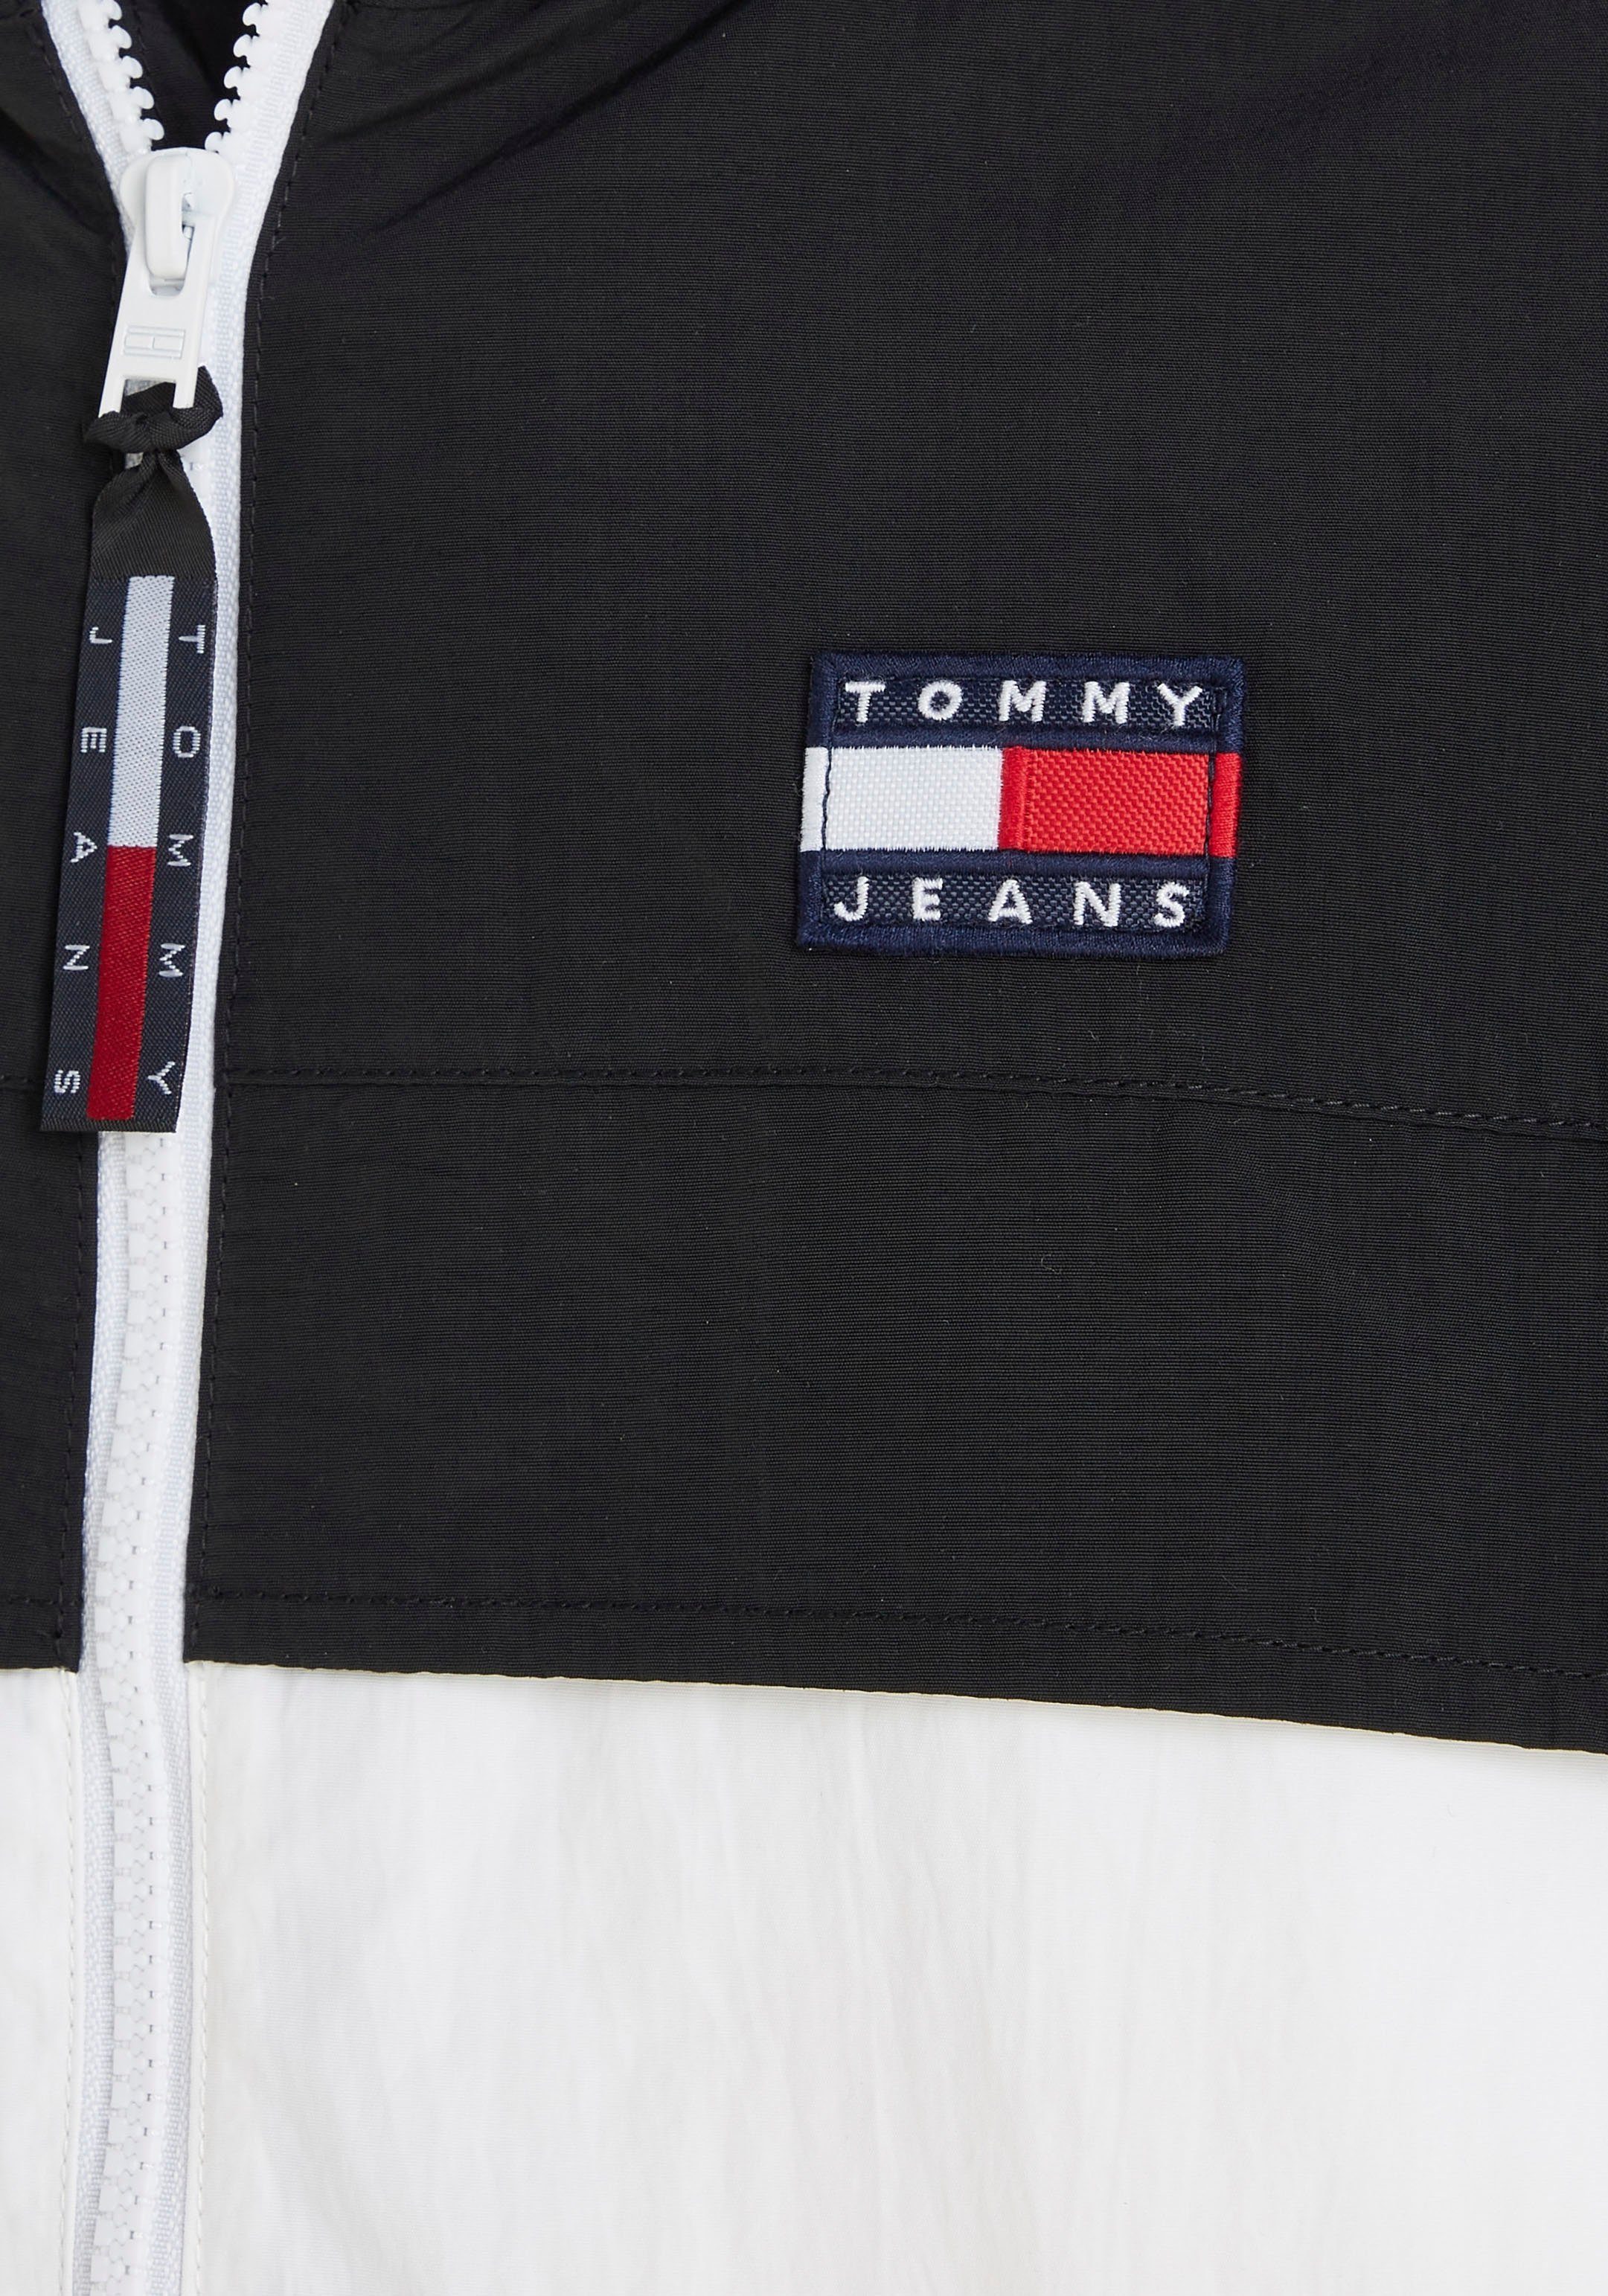 Jeans CHICAGO Windbreaker CLBK im Black/DeepCrimson/White Tommy TJM WINDBREAKER Design colorblocking